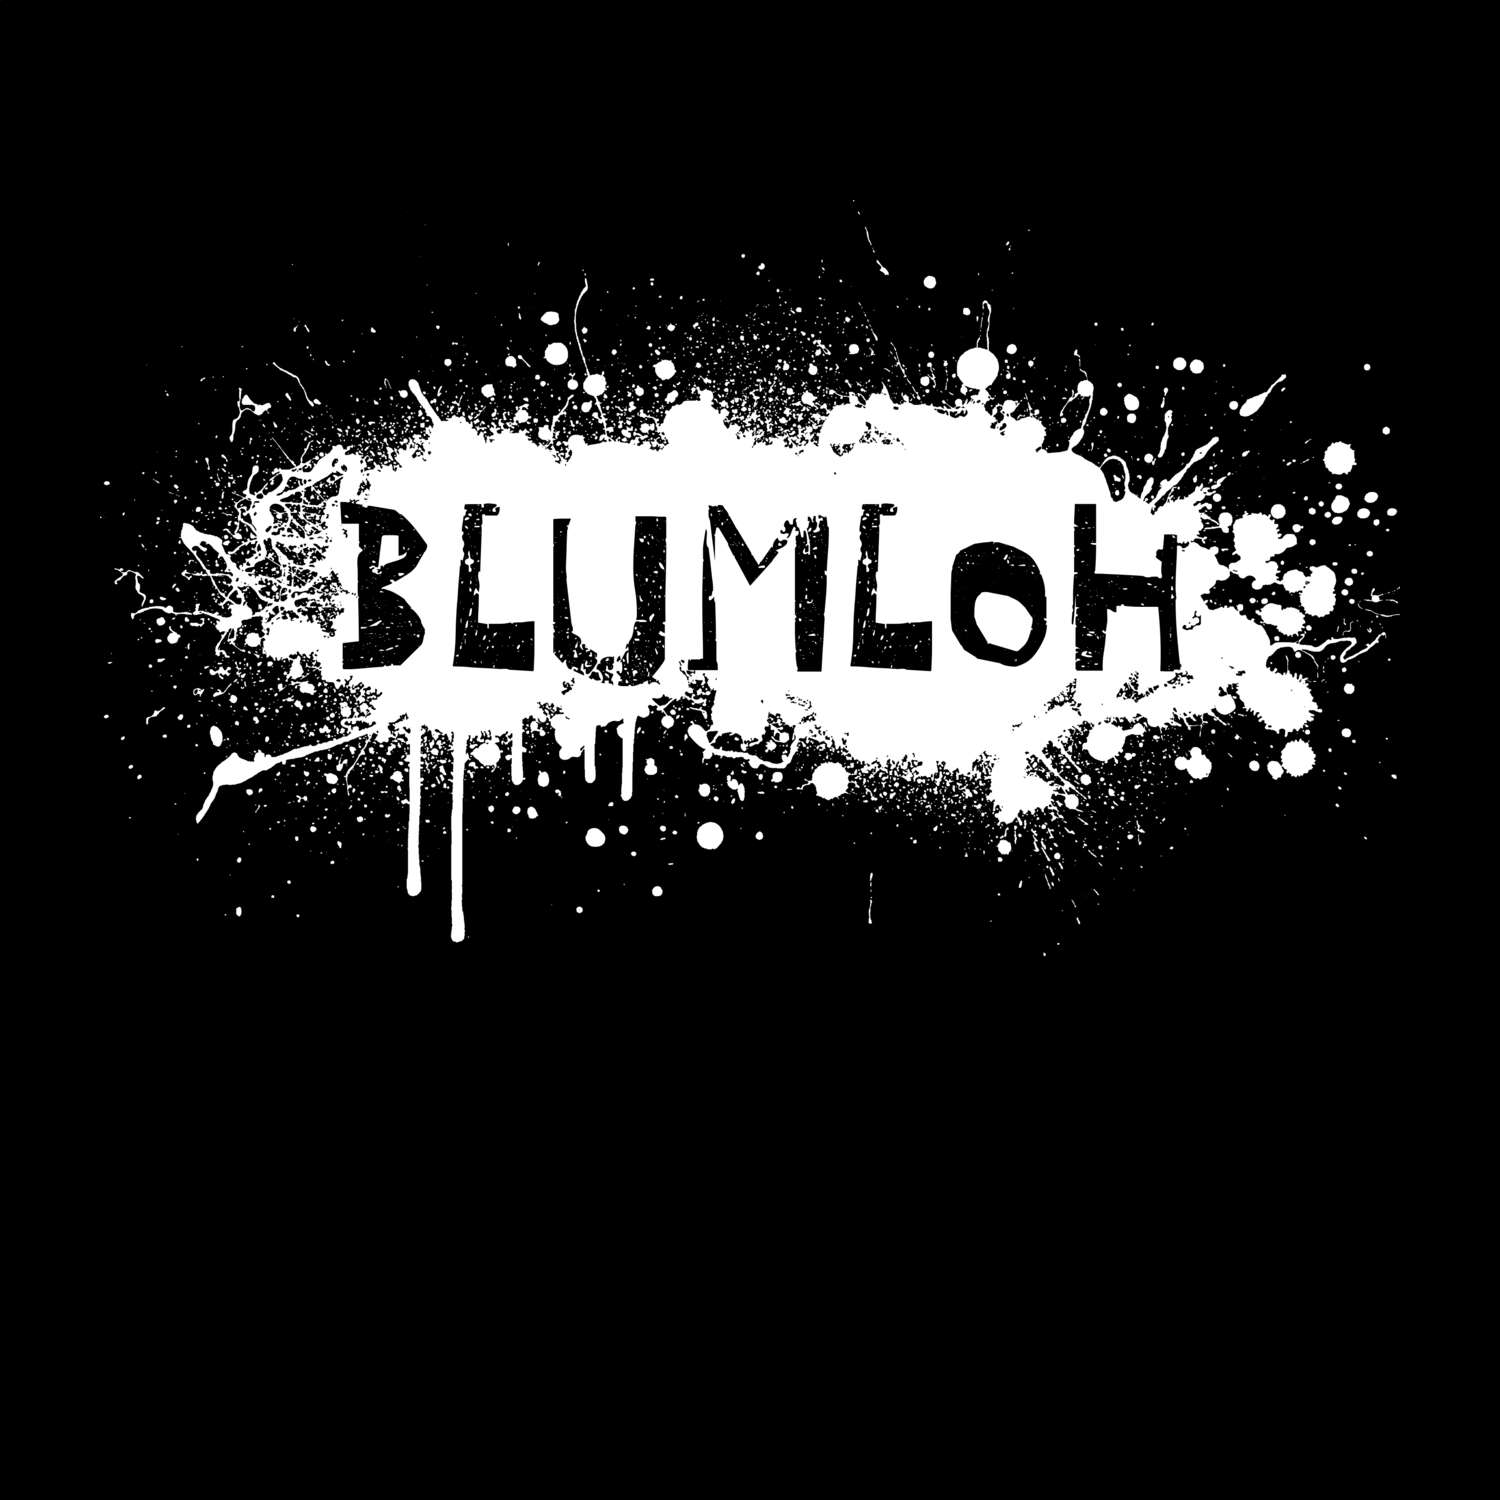 Blumloh T-Shirt »Paint Splash Punk«